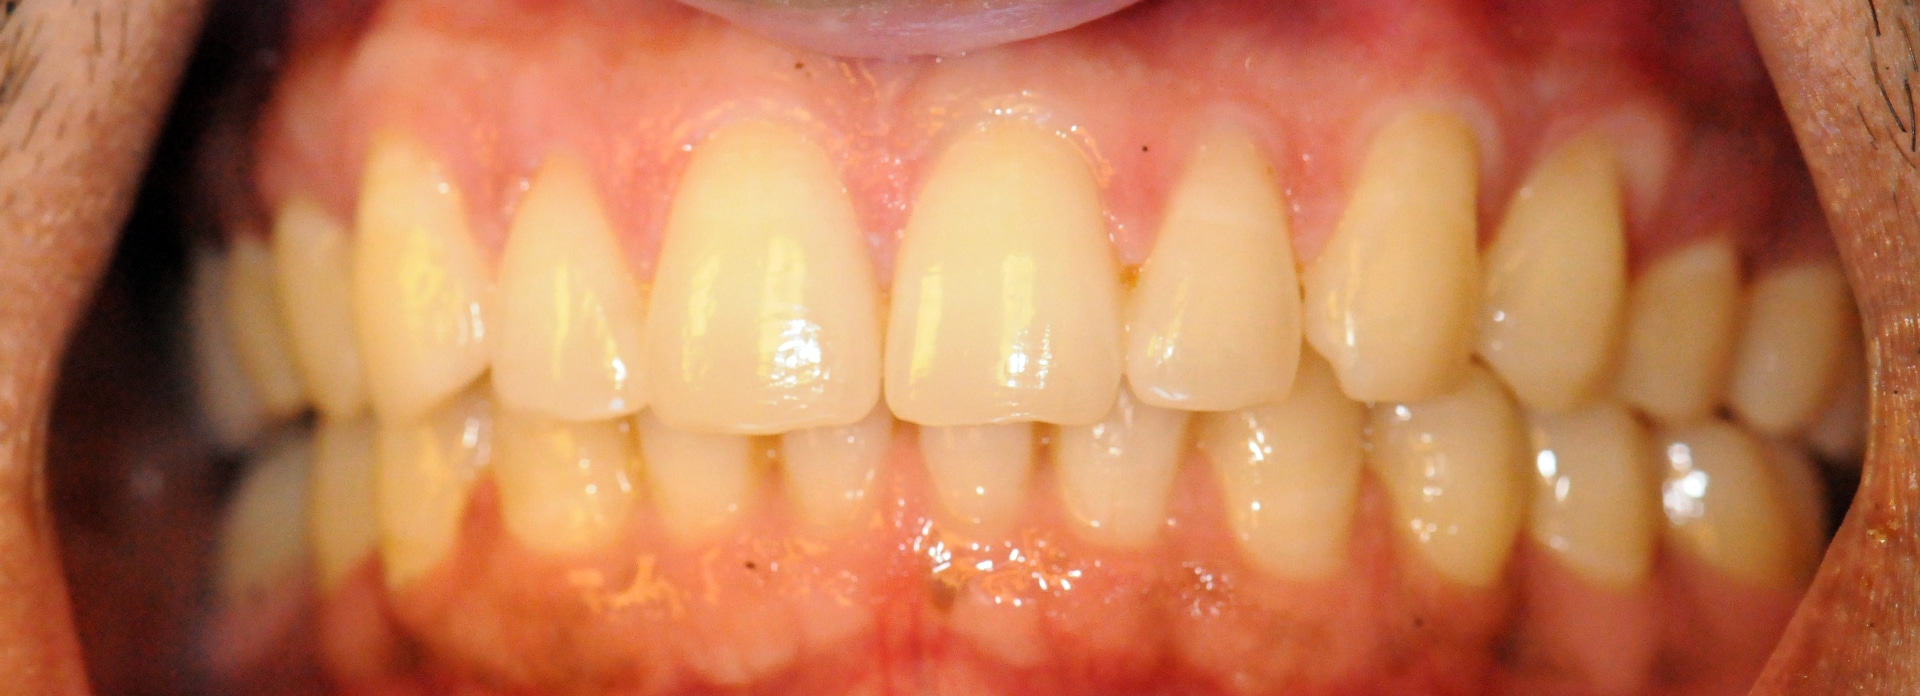 D Dental Office | Teeth Whitening - Before